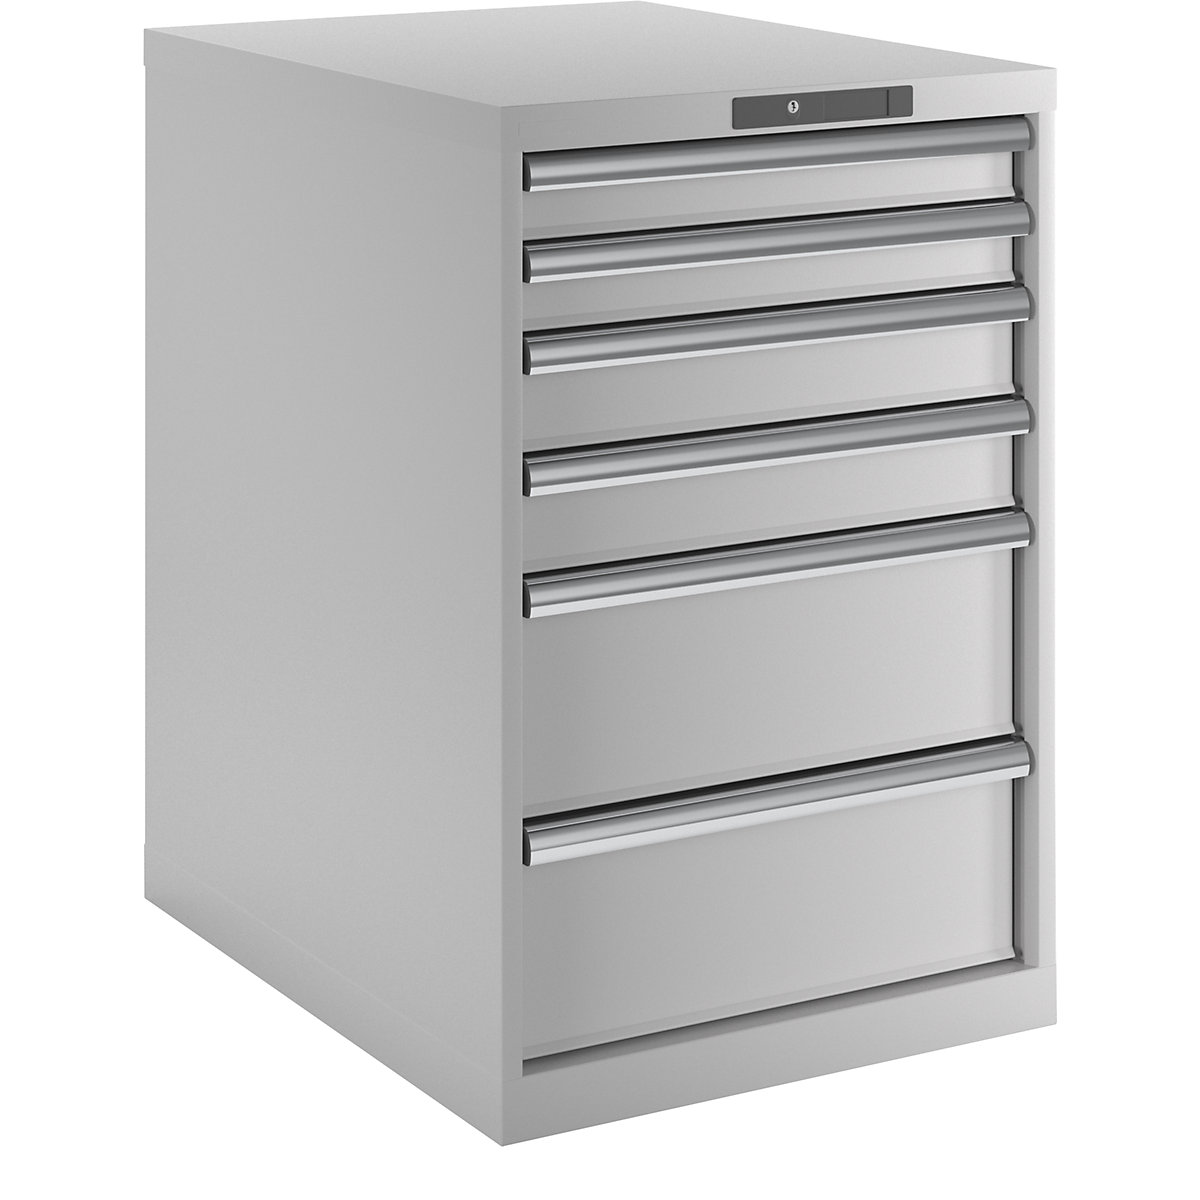 Drawer cupboard, 6 drawers – LISTA, WxDxH 564 x 724 x 850 mm, light grey-3